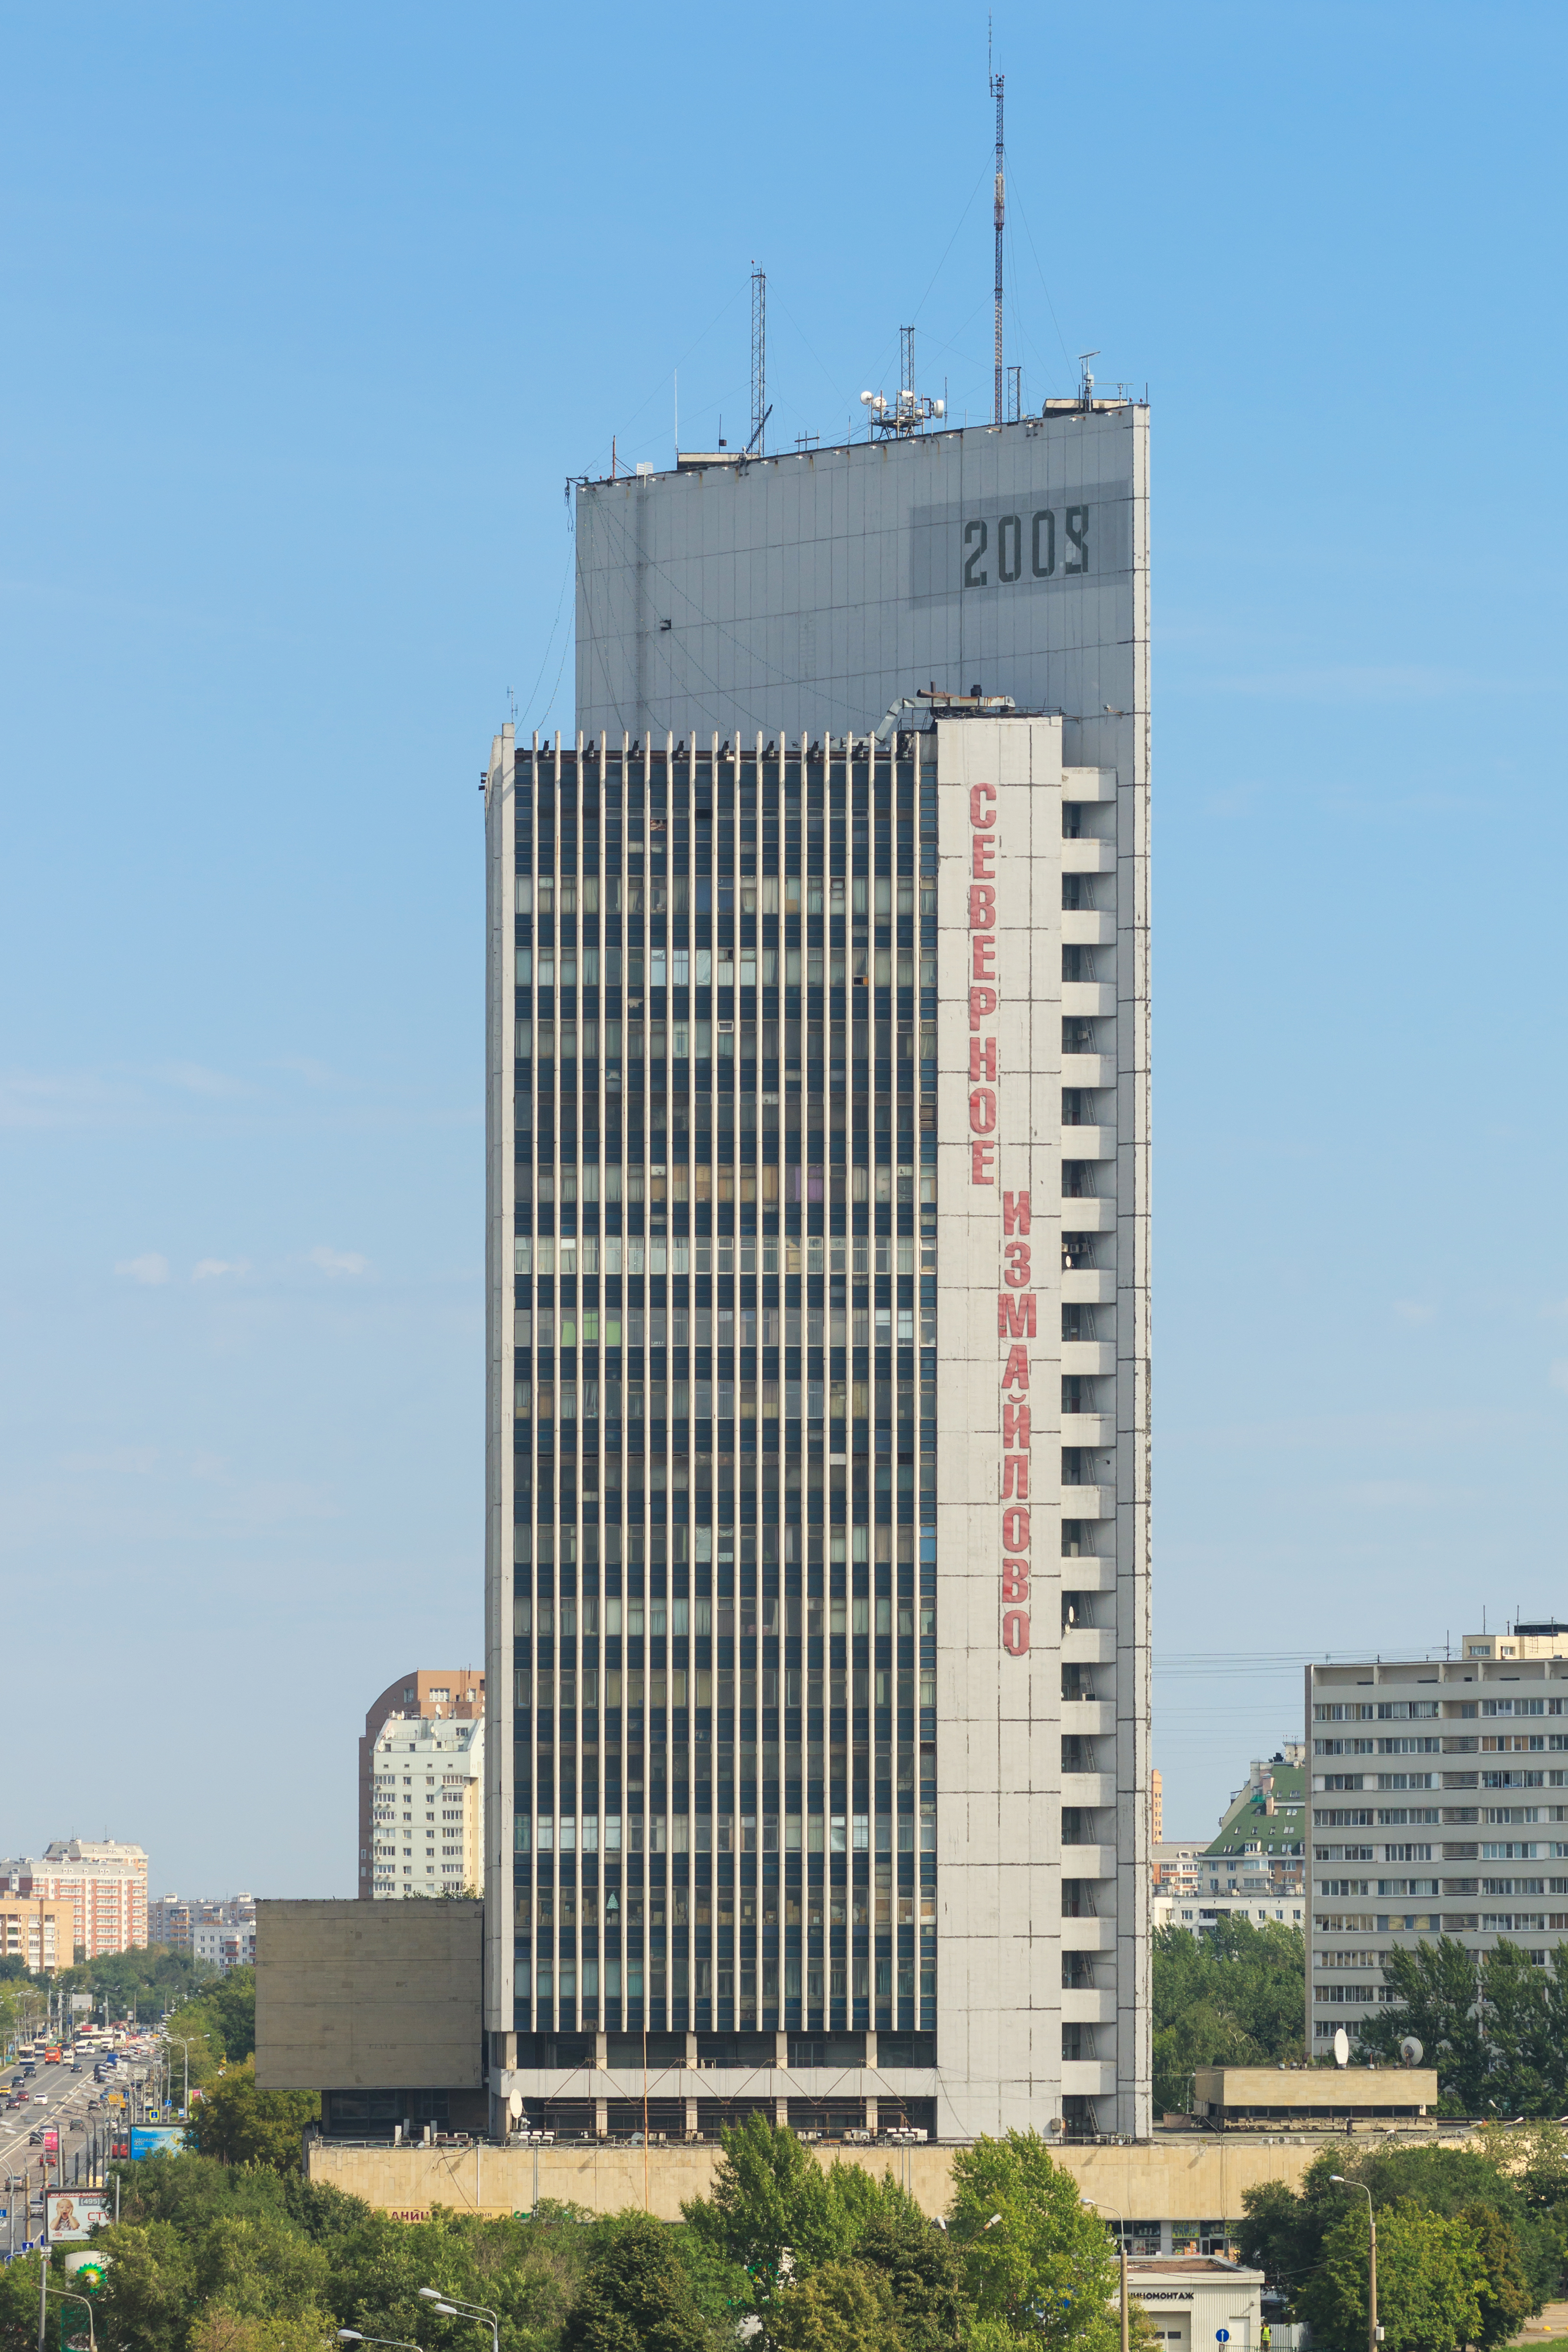 Moscow North Izmaylovo Tower 08-2016